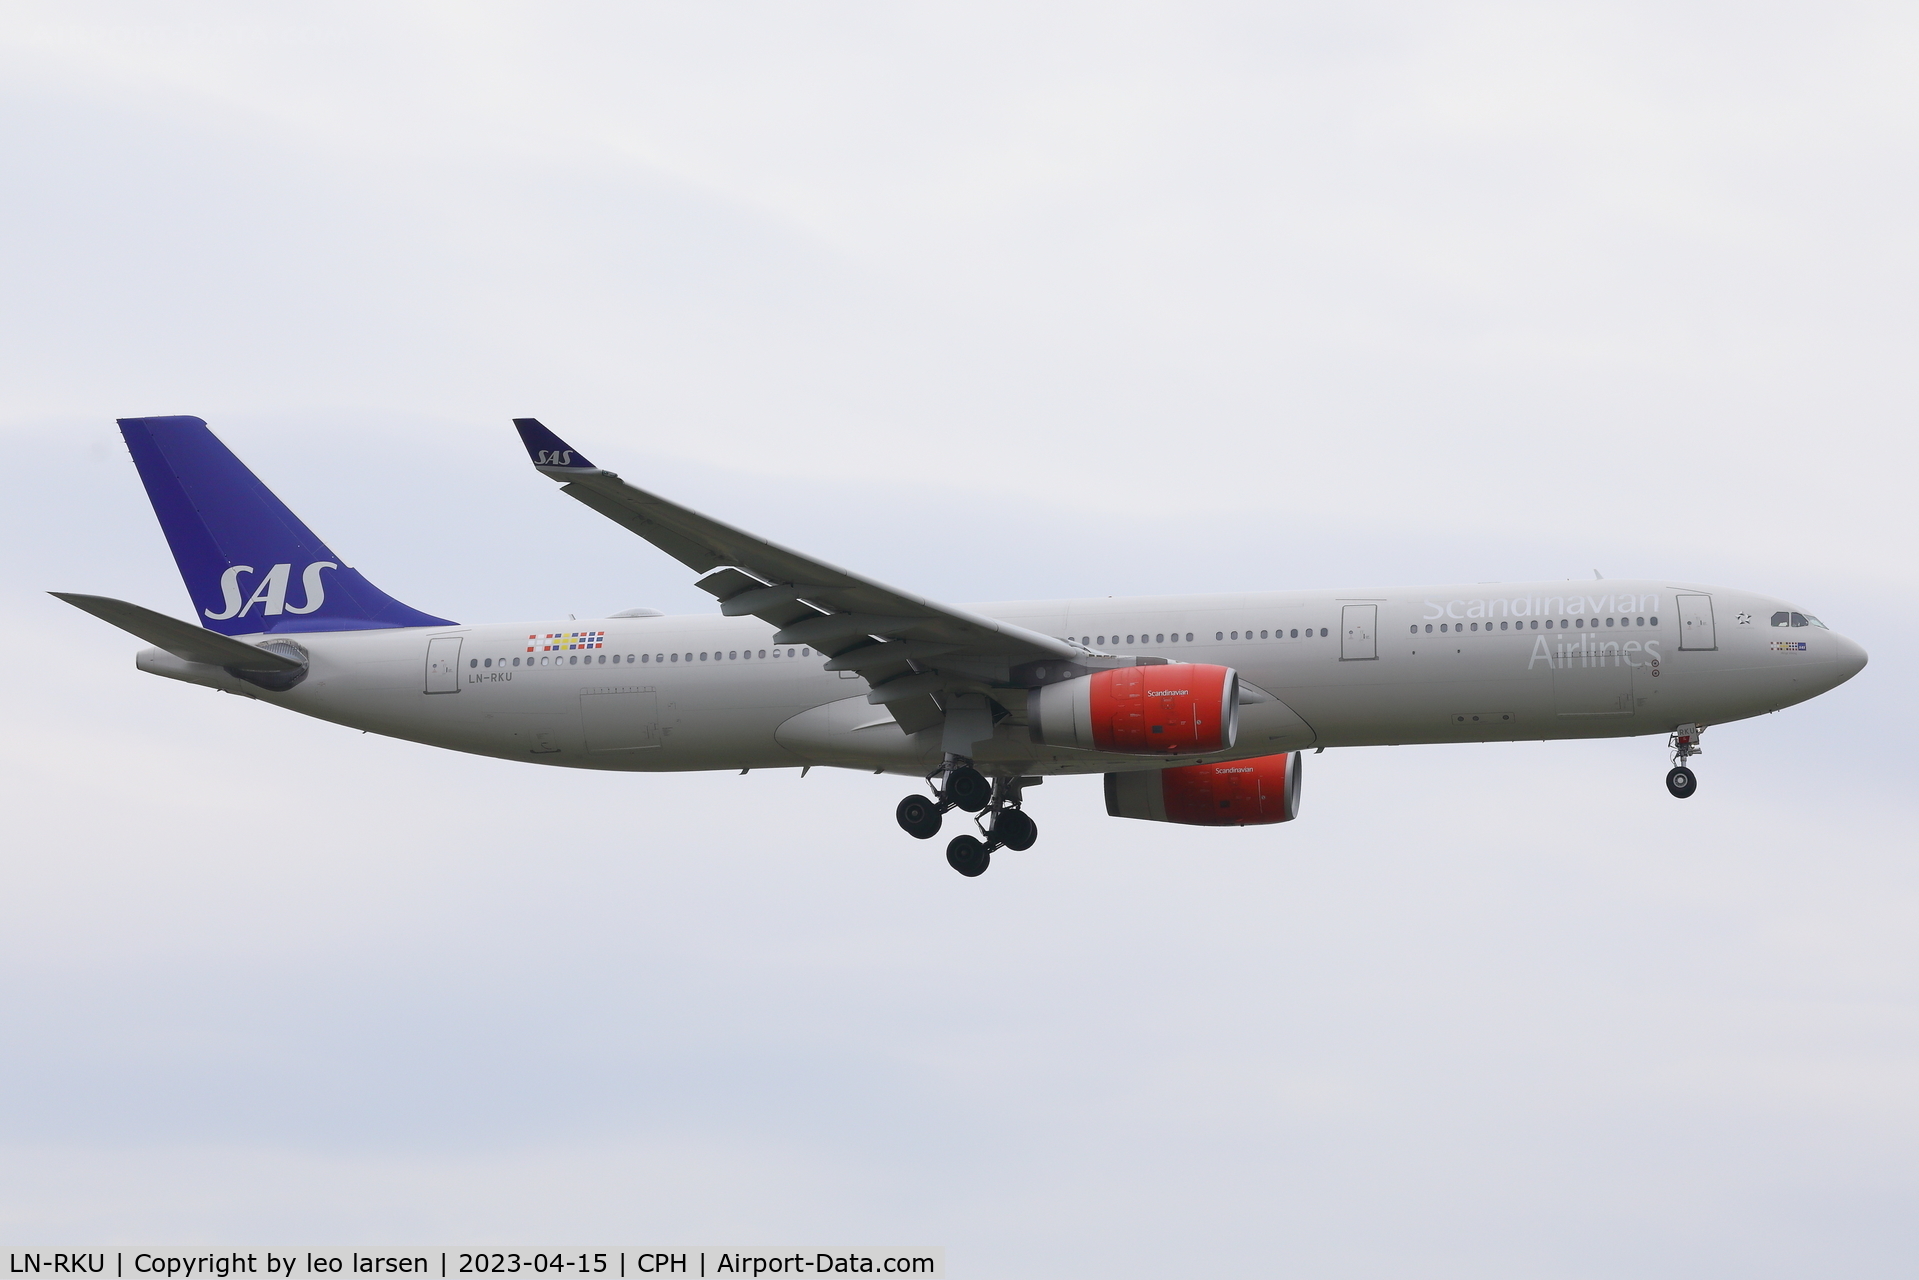 LN-RKU, 2016 Airbus A330-343 C/N 1715, Copenhagen 15.4.2023